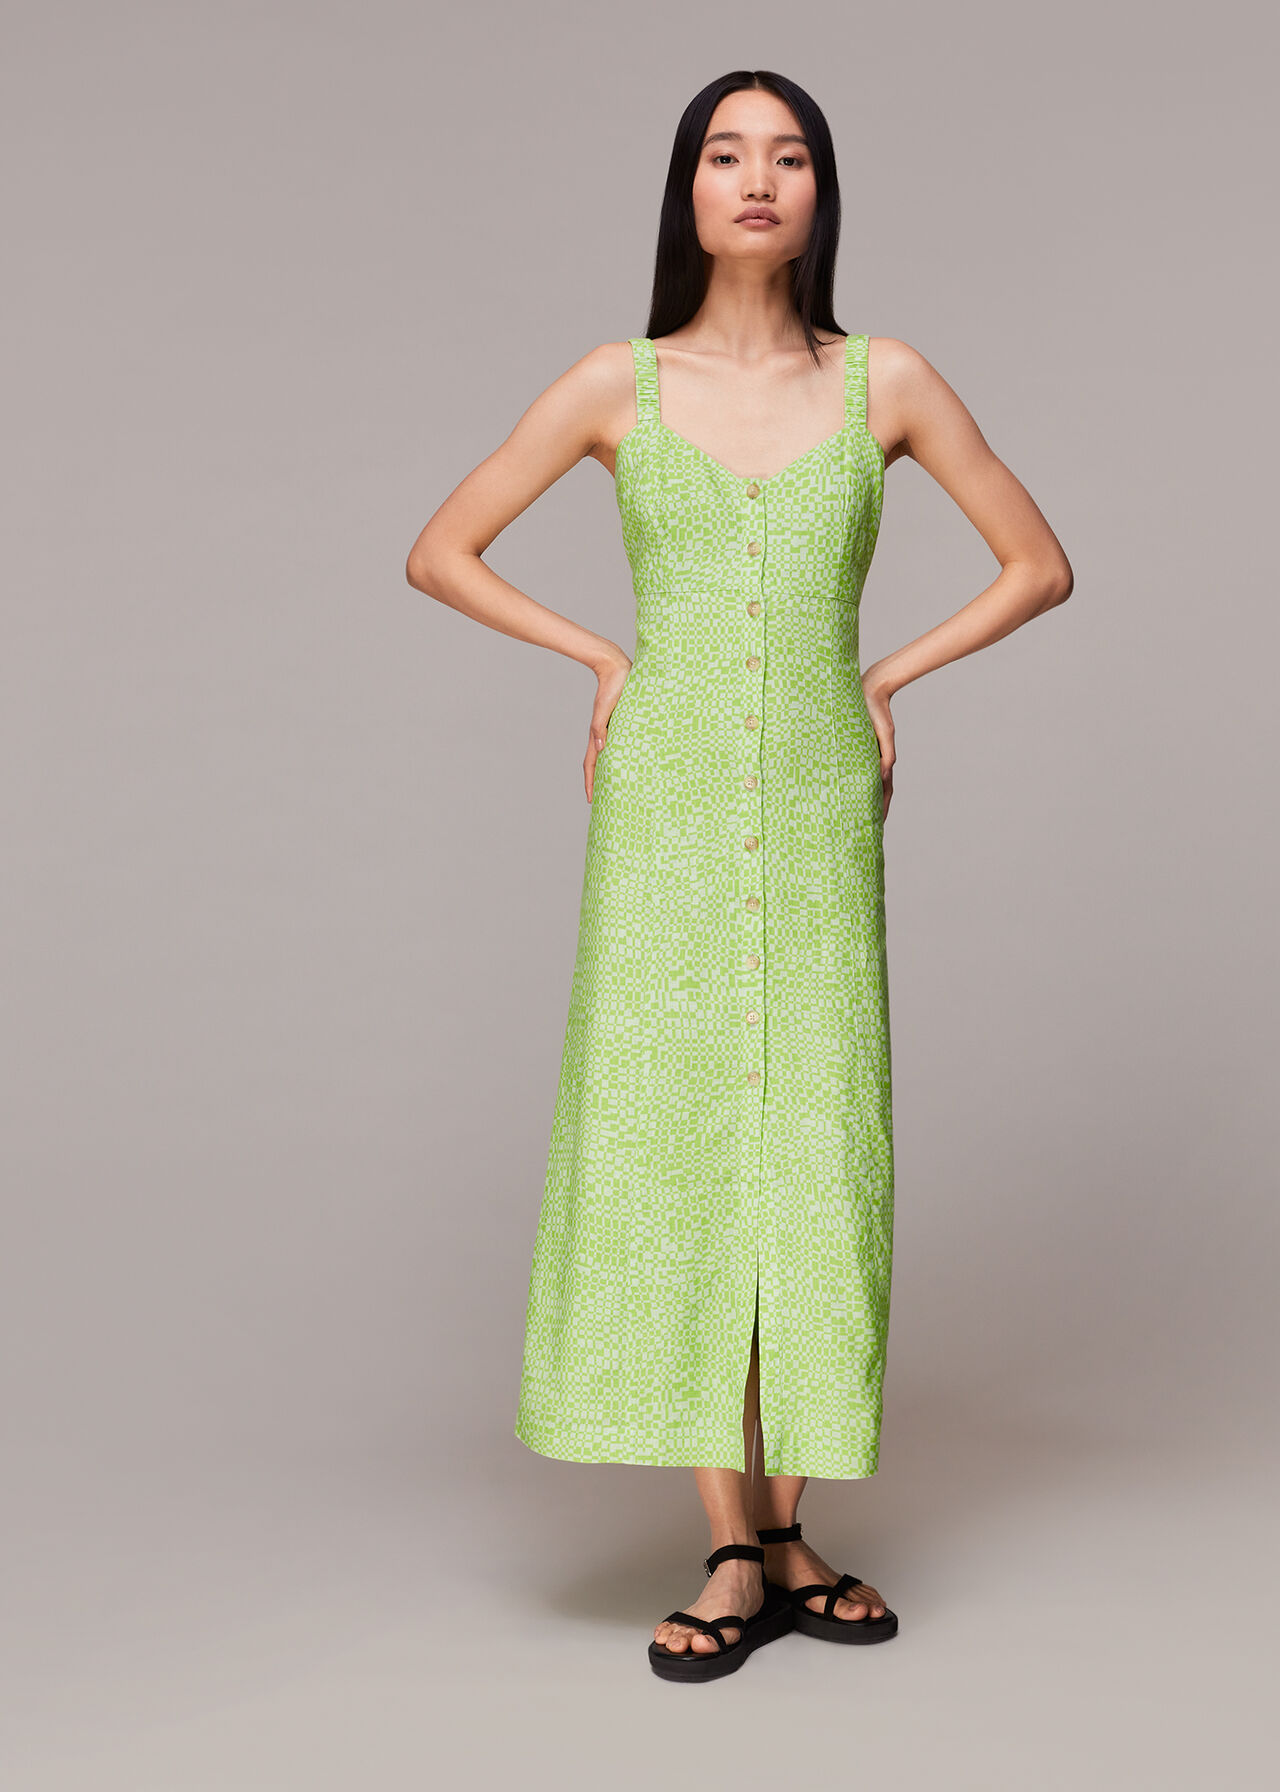 Lime Elenor Square Neck Midi Dress, WHISTLES